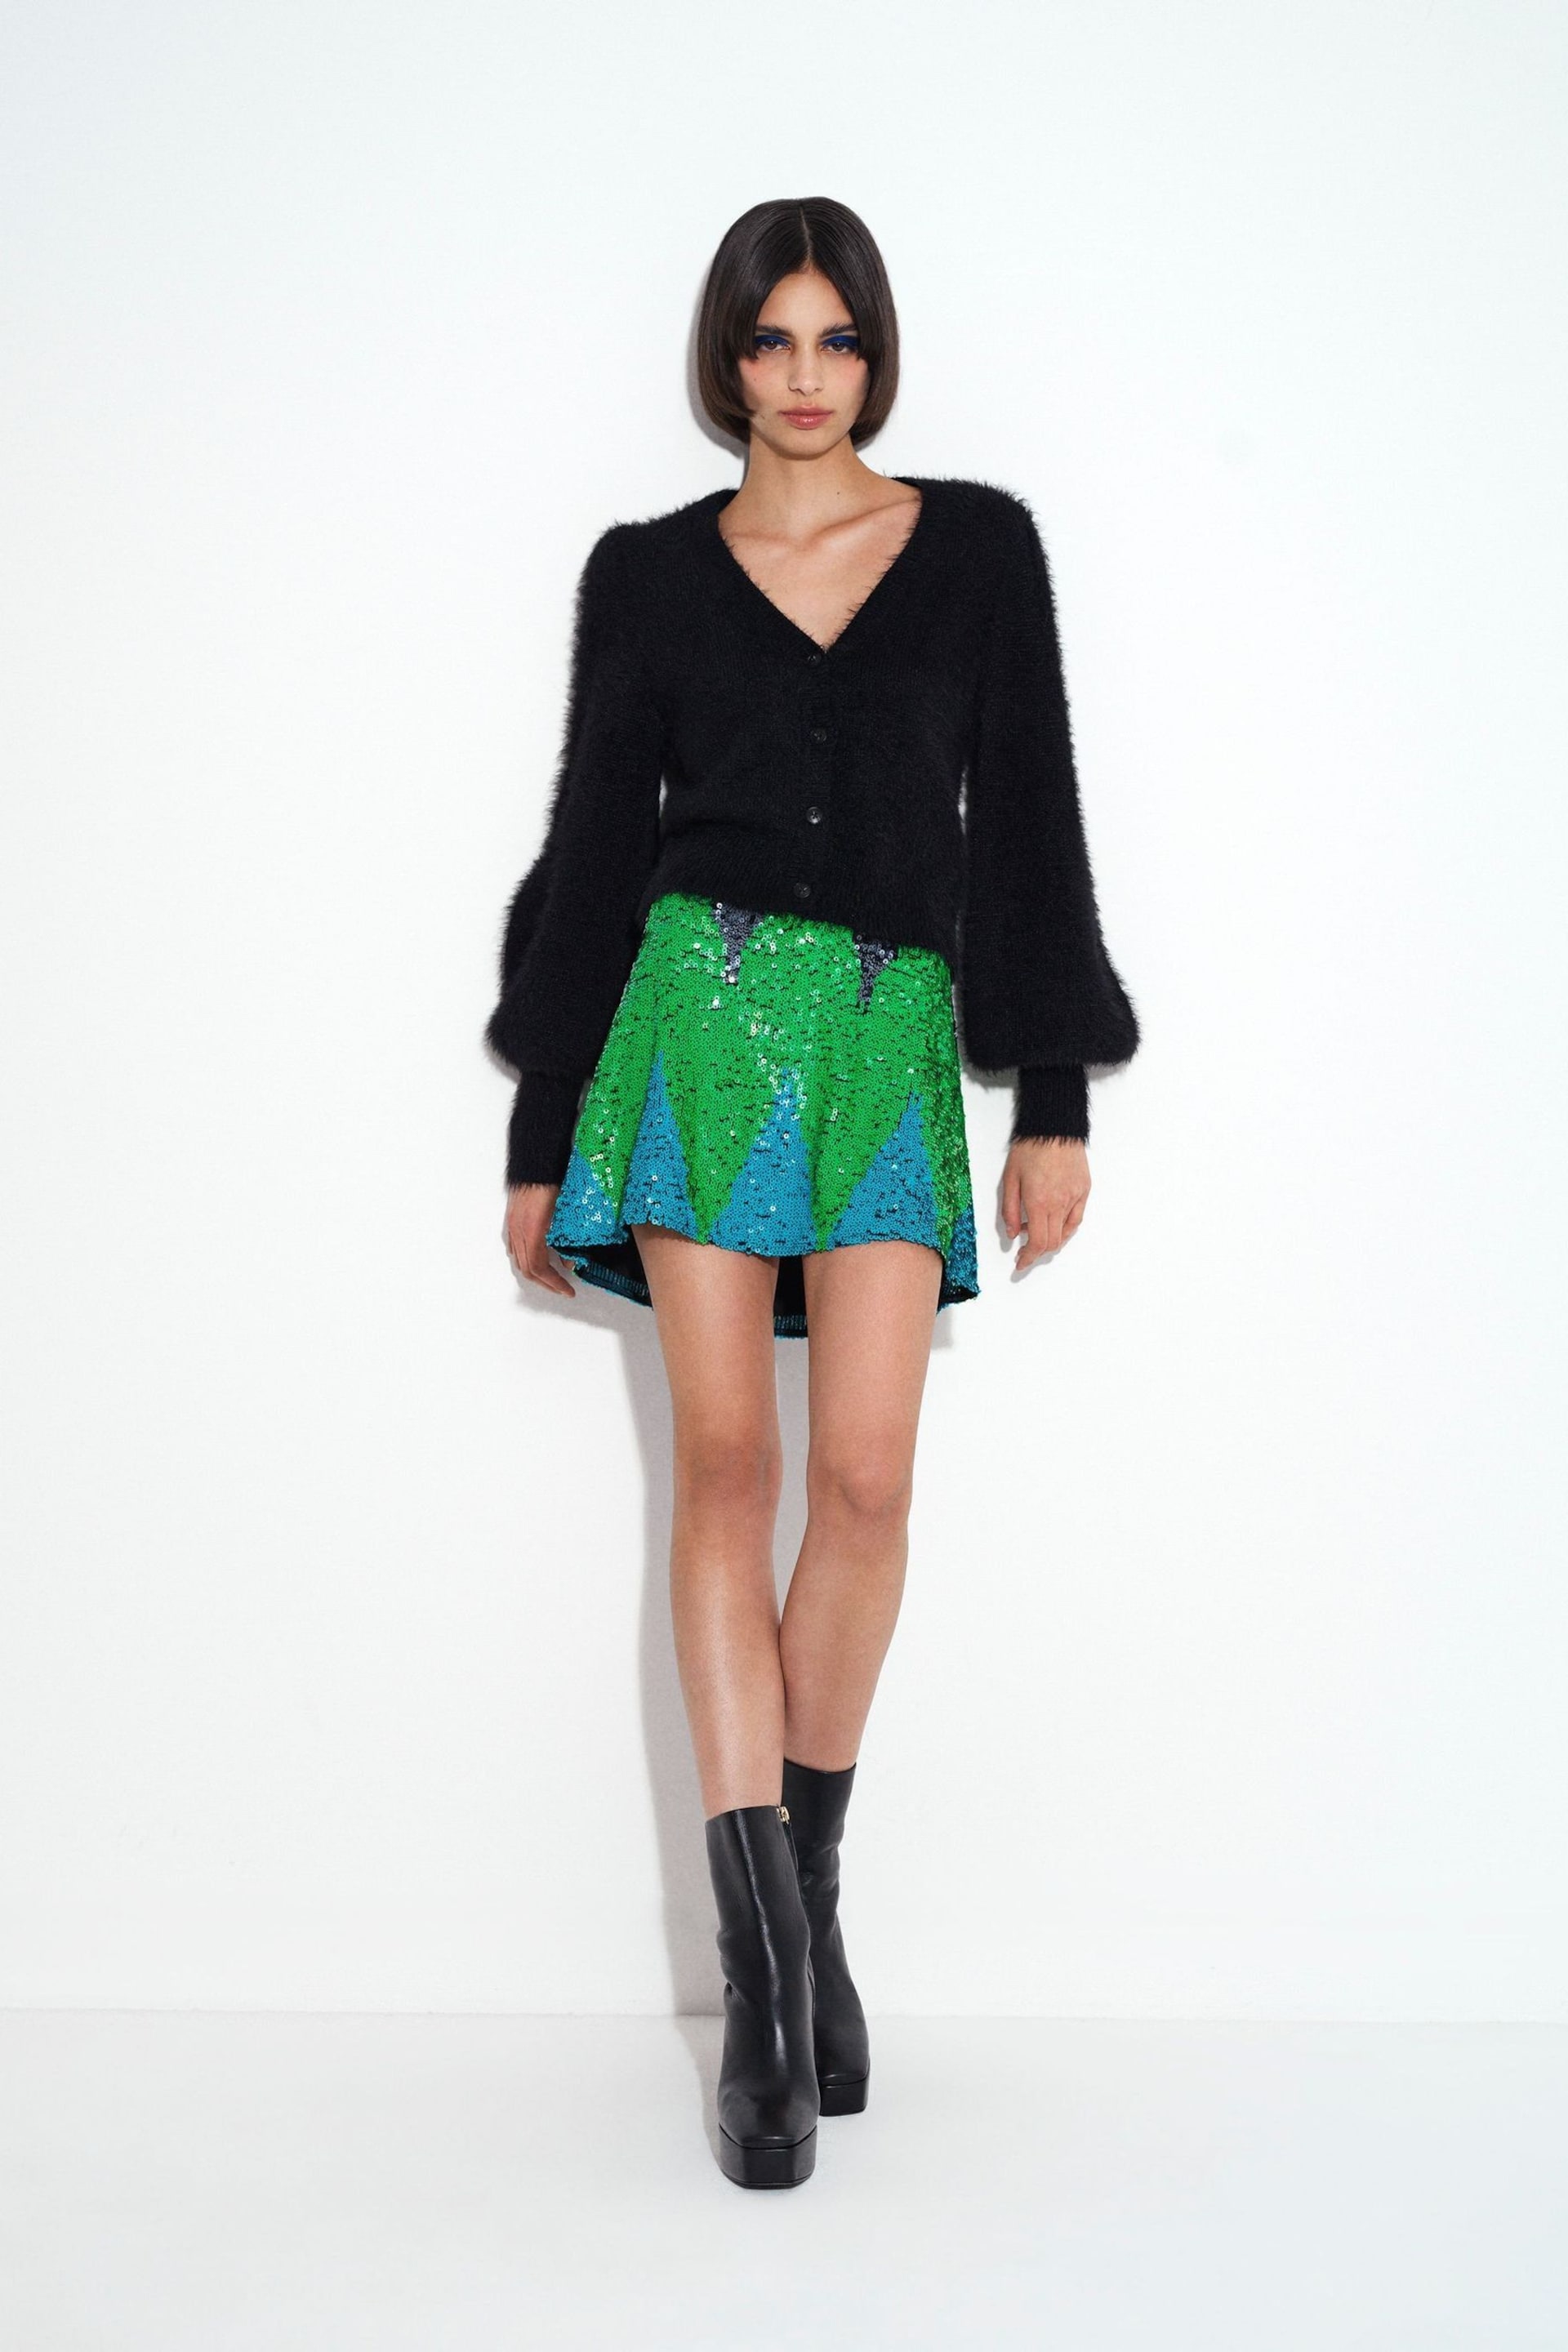 French Connection Emin Embellished Skirt - Image 1 of 2